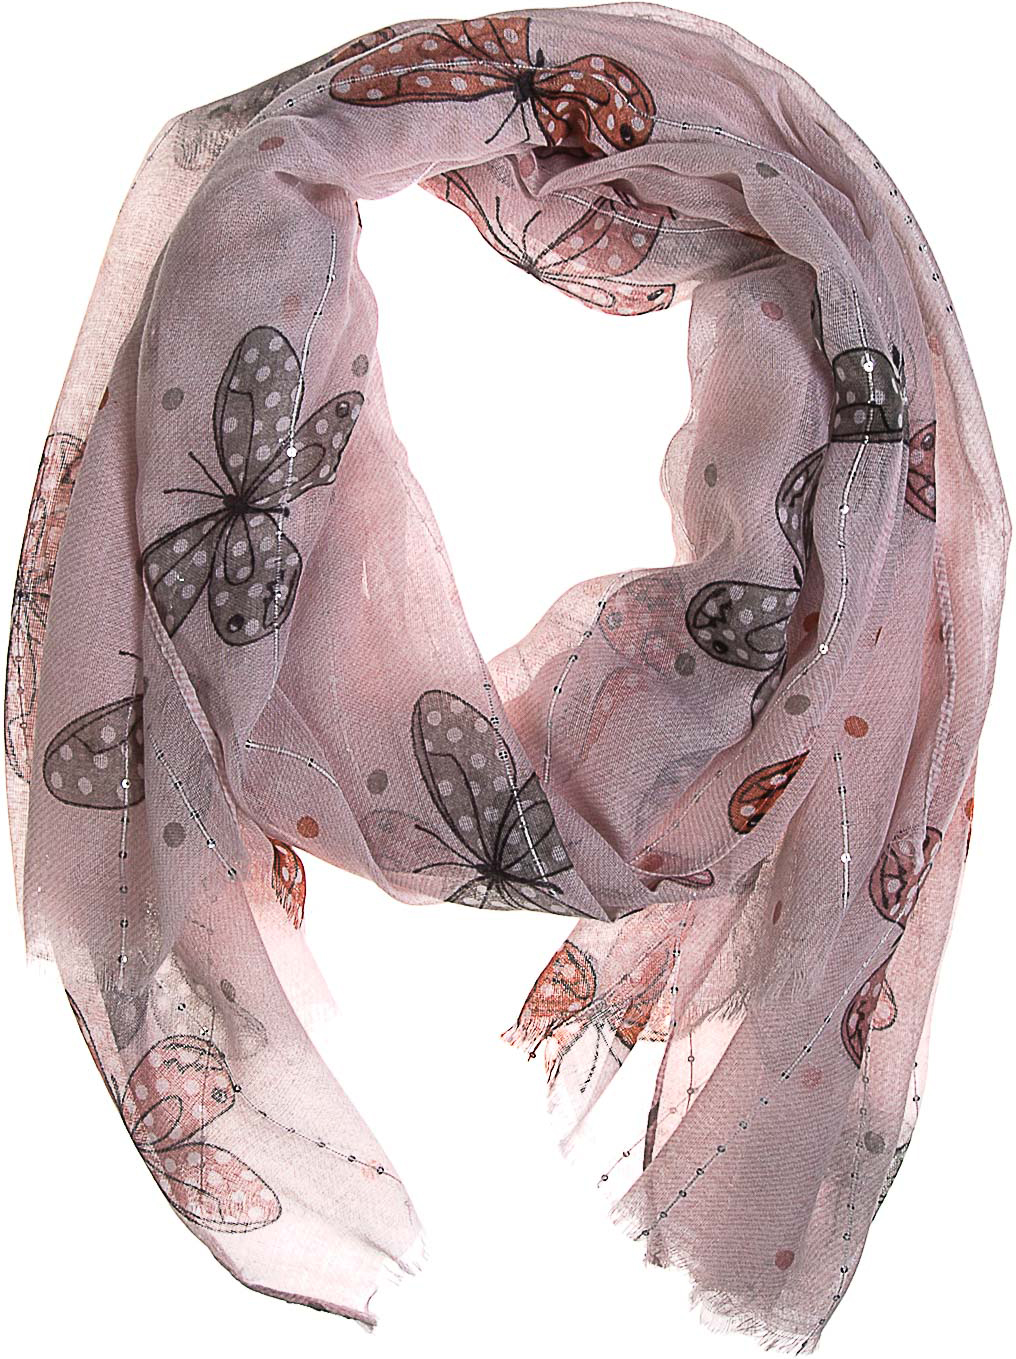 Палантин женский Vittorio Richi, цвет: розовый, серый. K05V5522. Размер 180 х 90 см